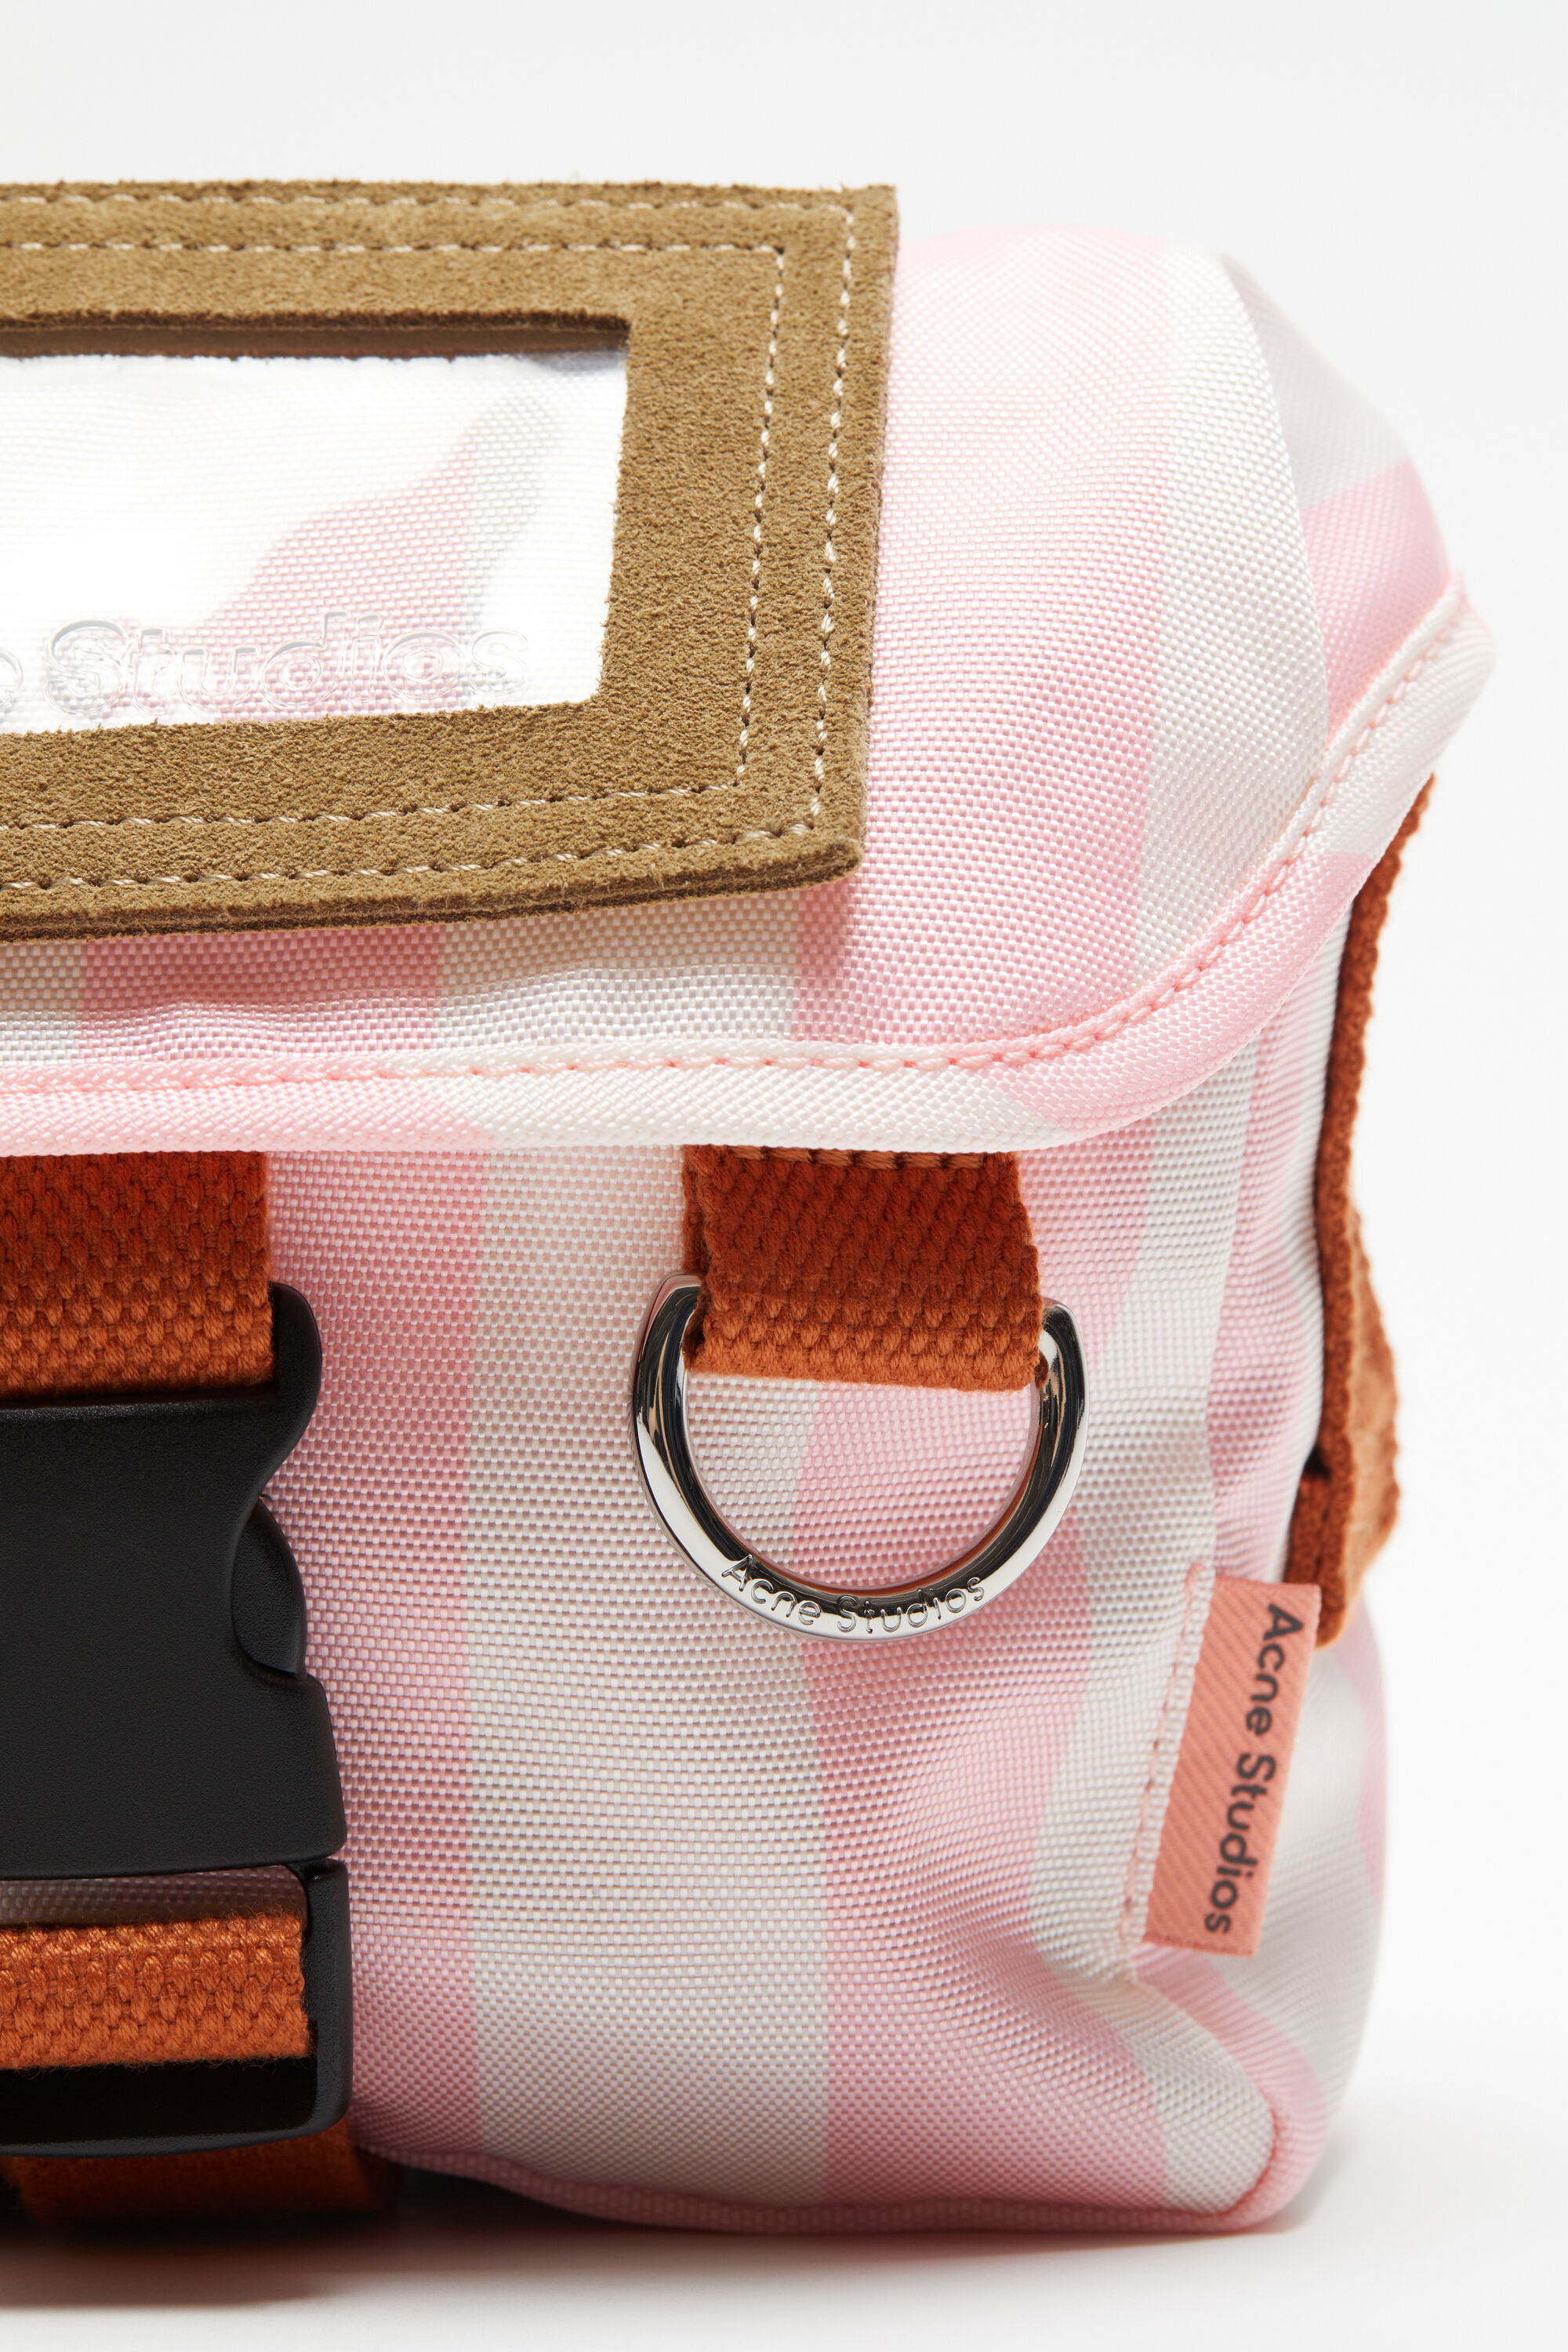 Acne Studios - Mini messenger bag - Light pink/off white